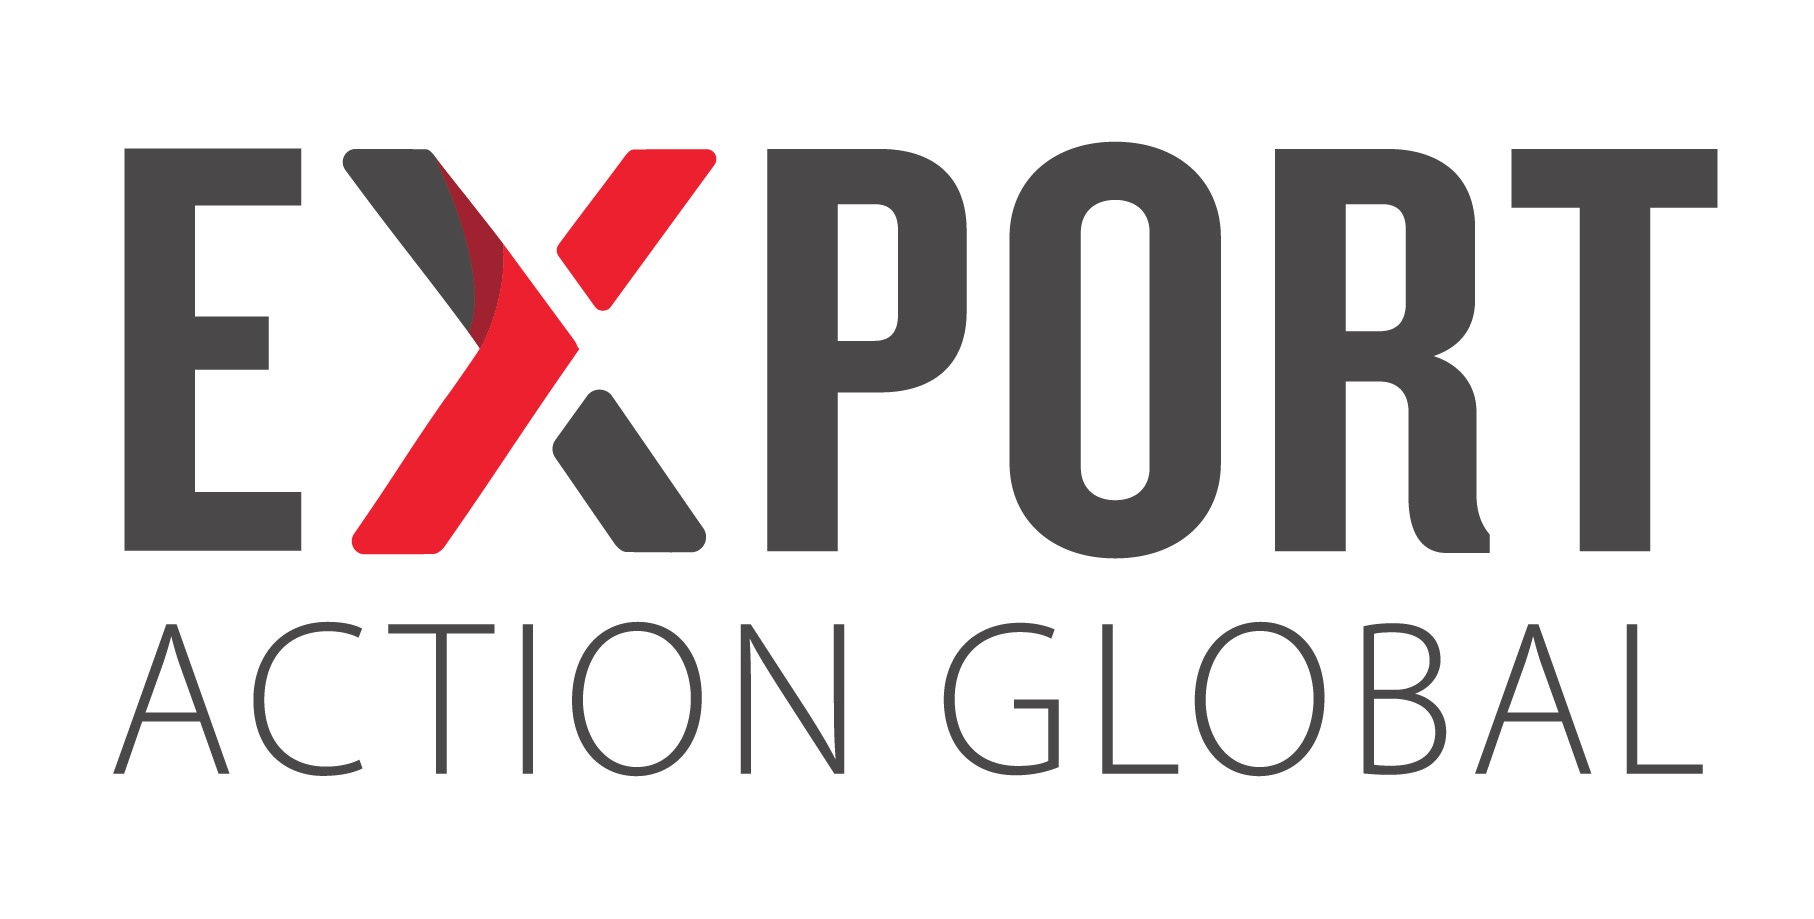 Export Action Global